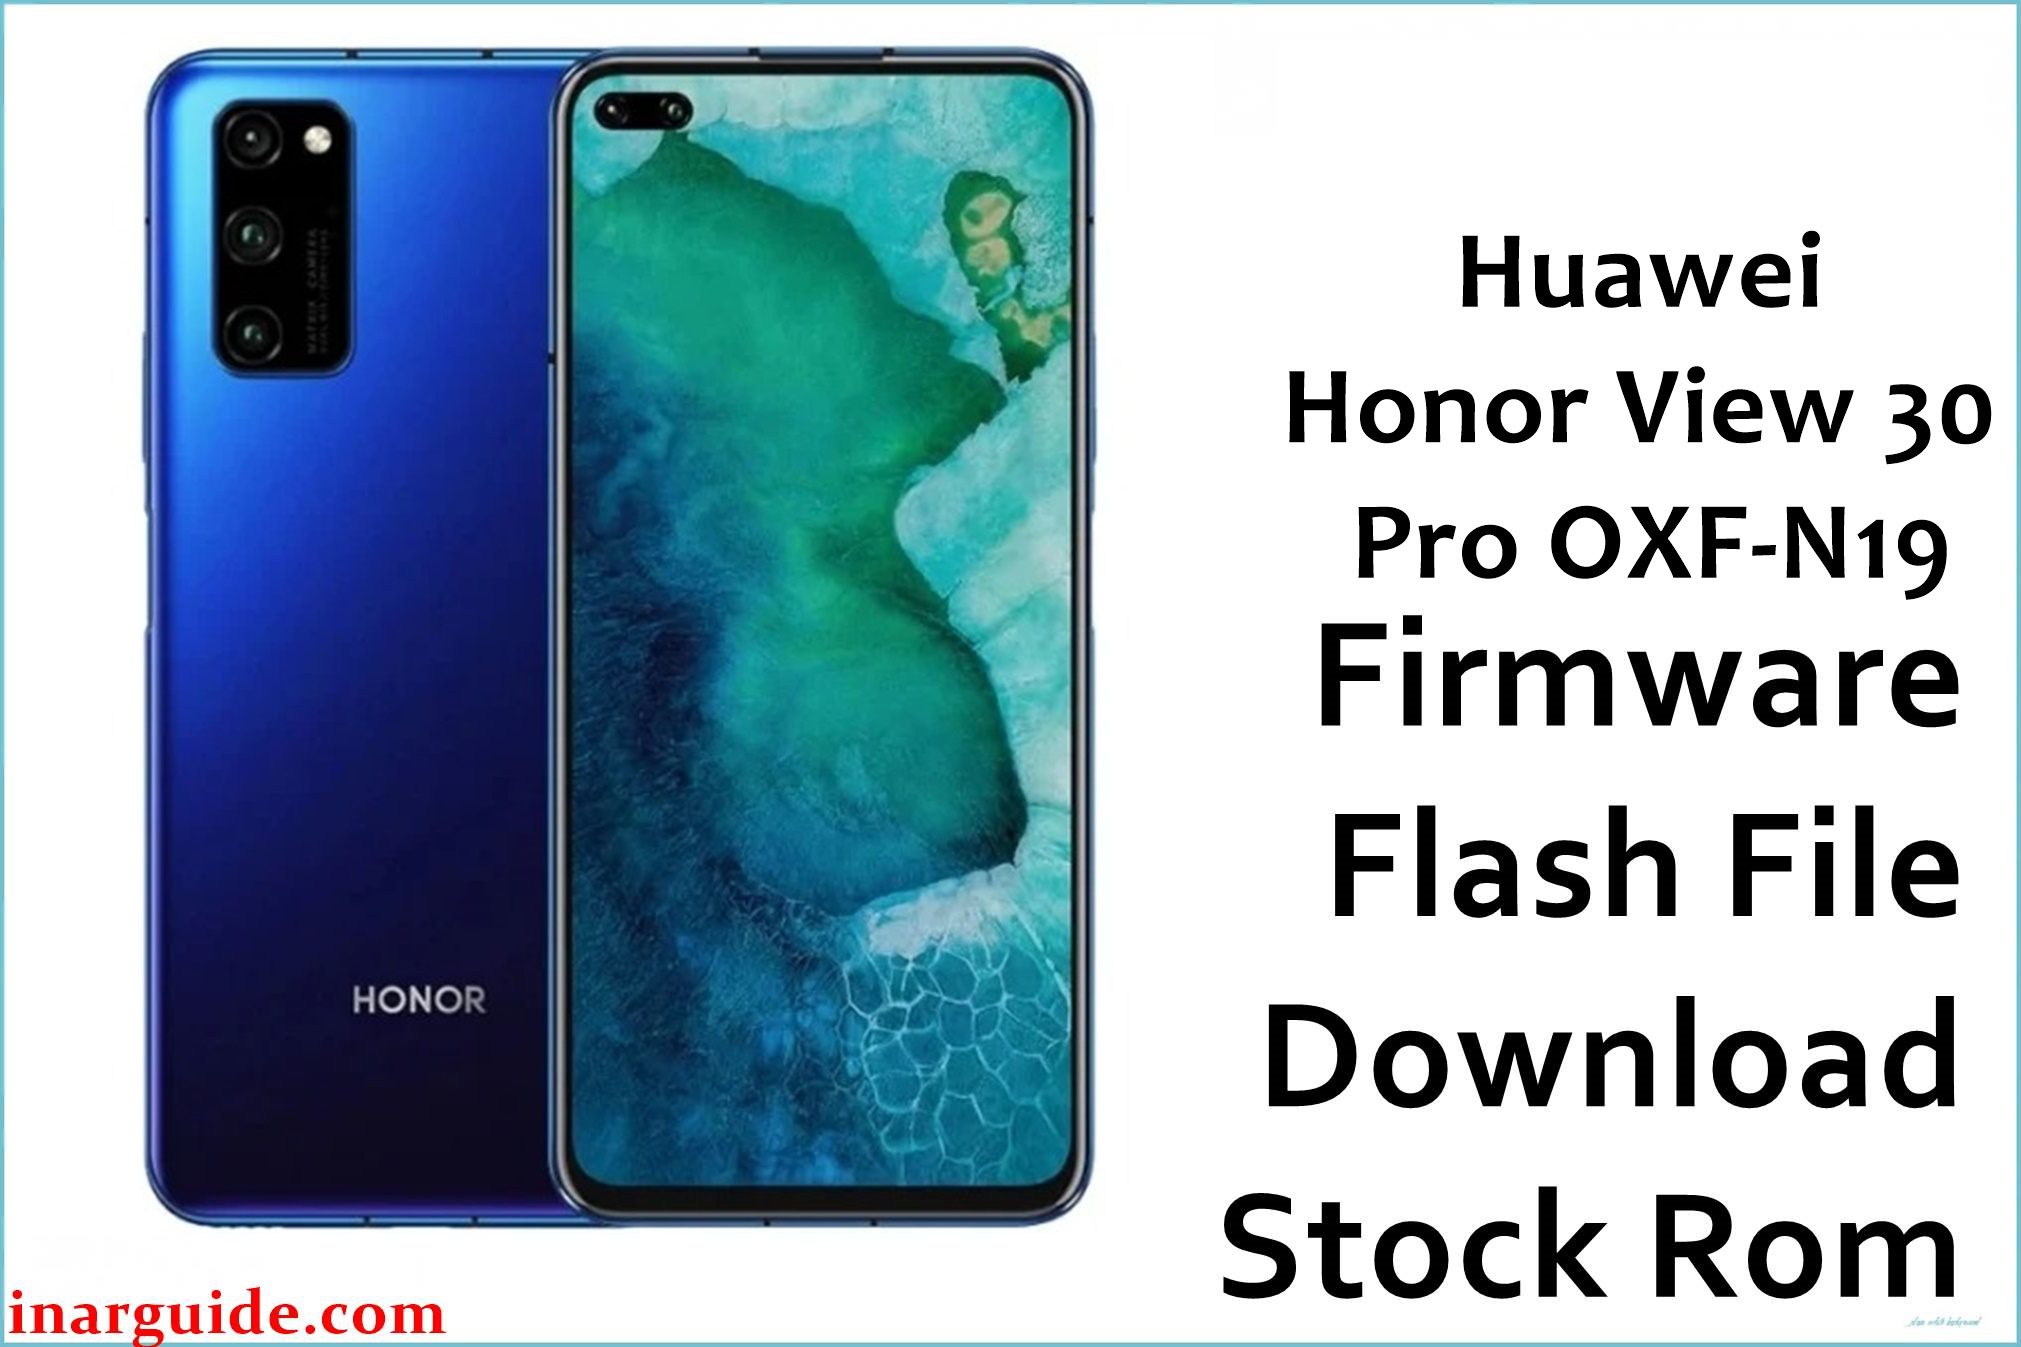 Huawei Honor View 30 Pro OXF N19